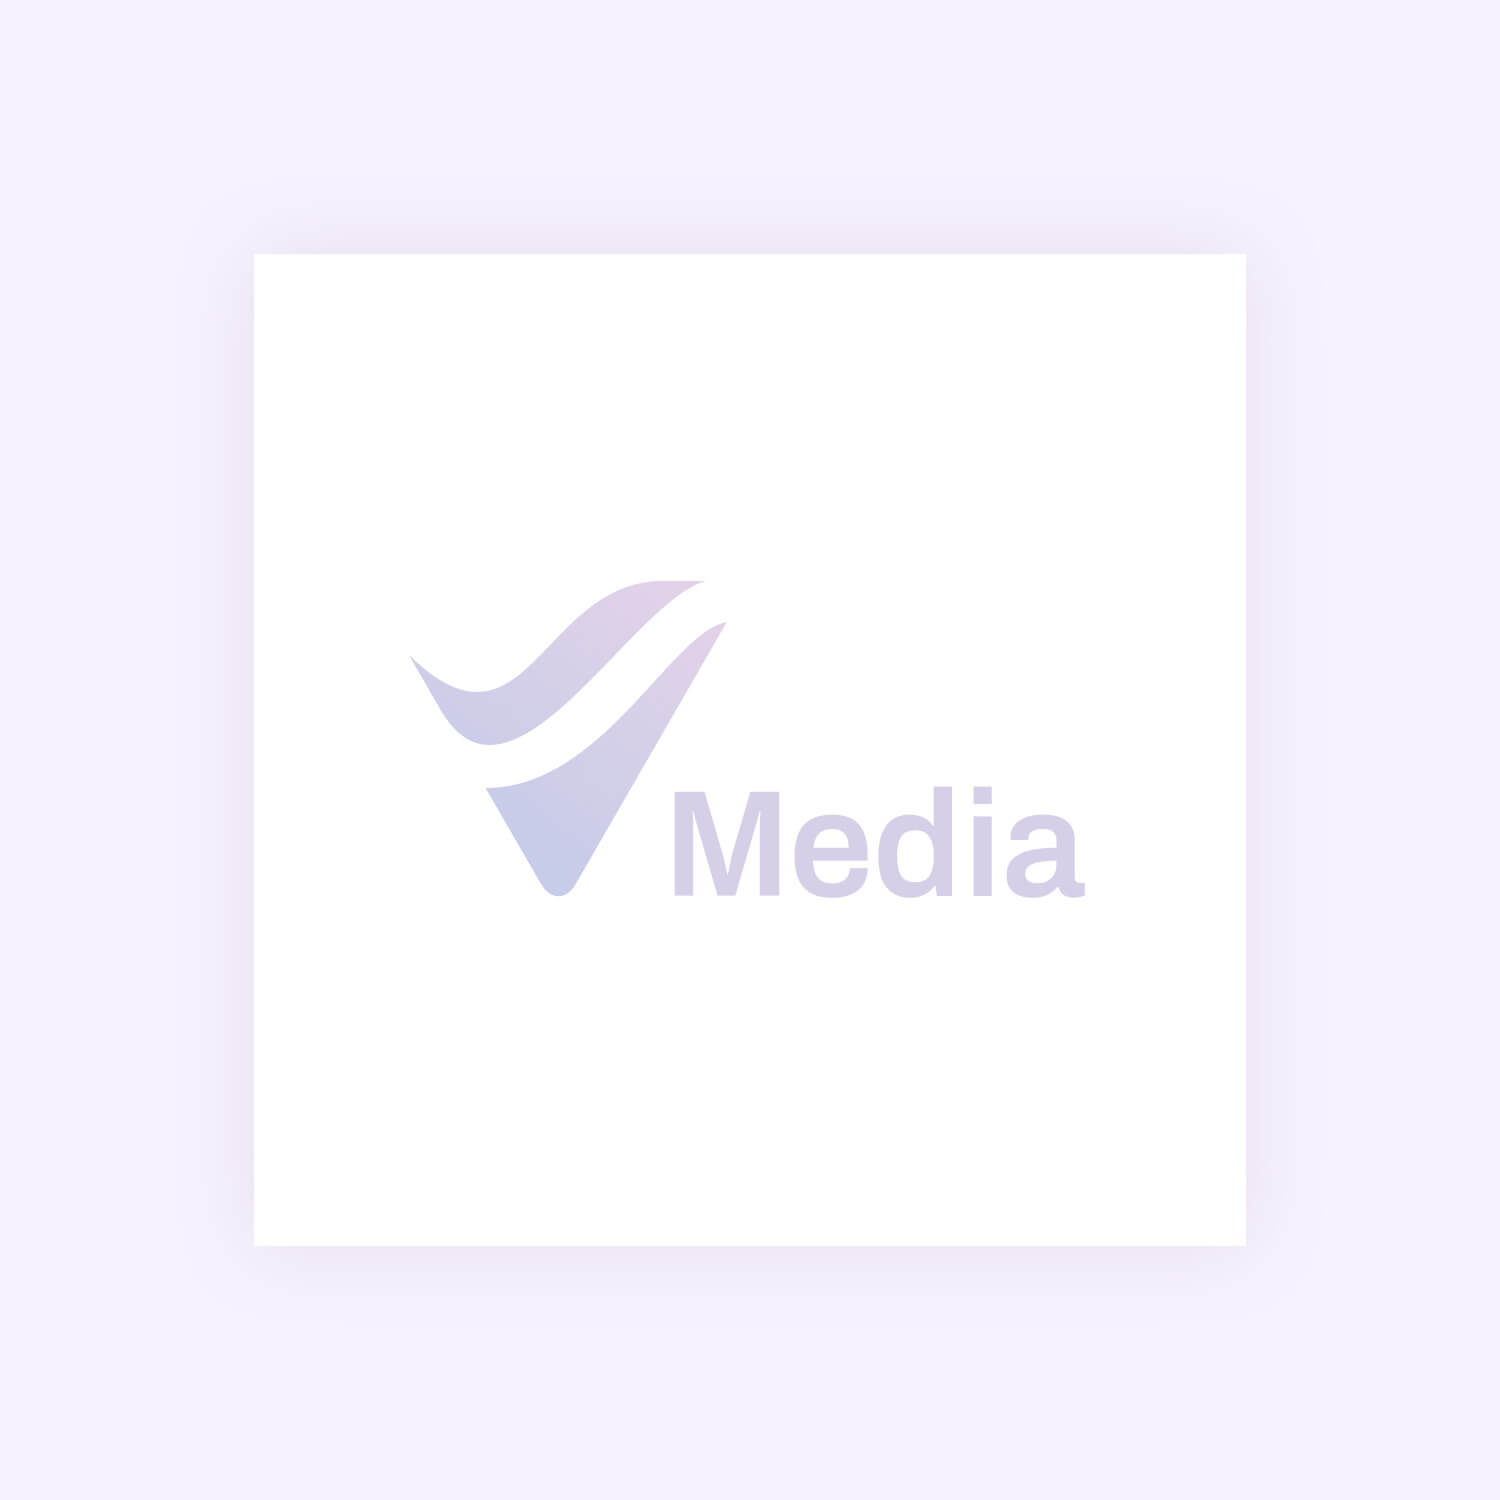 Vmedia – Logo design